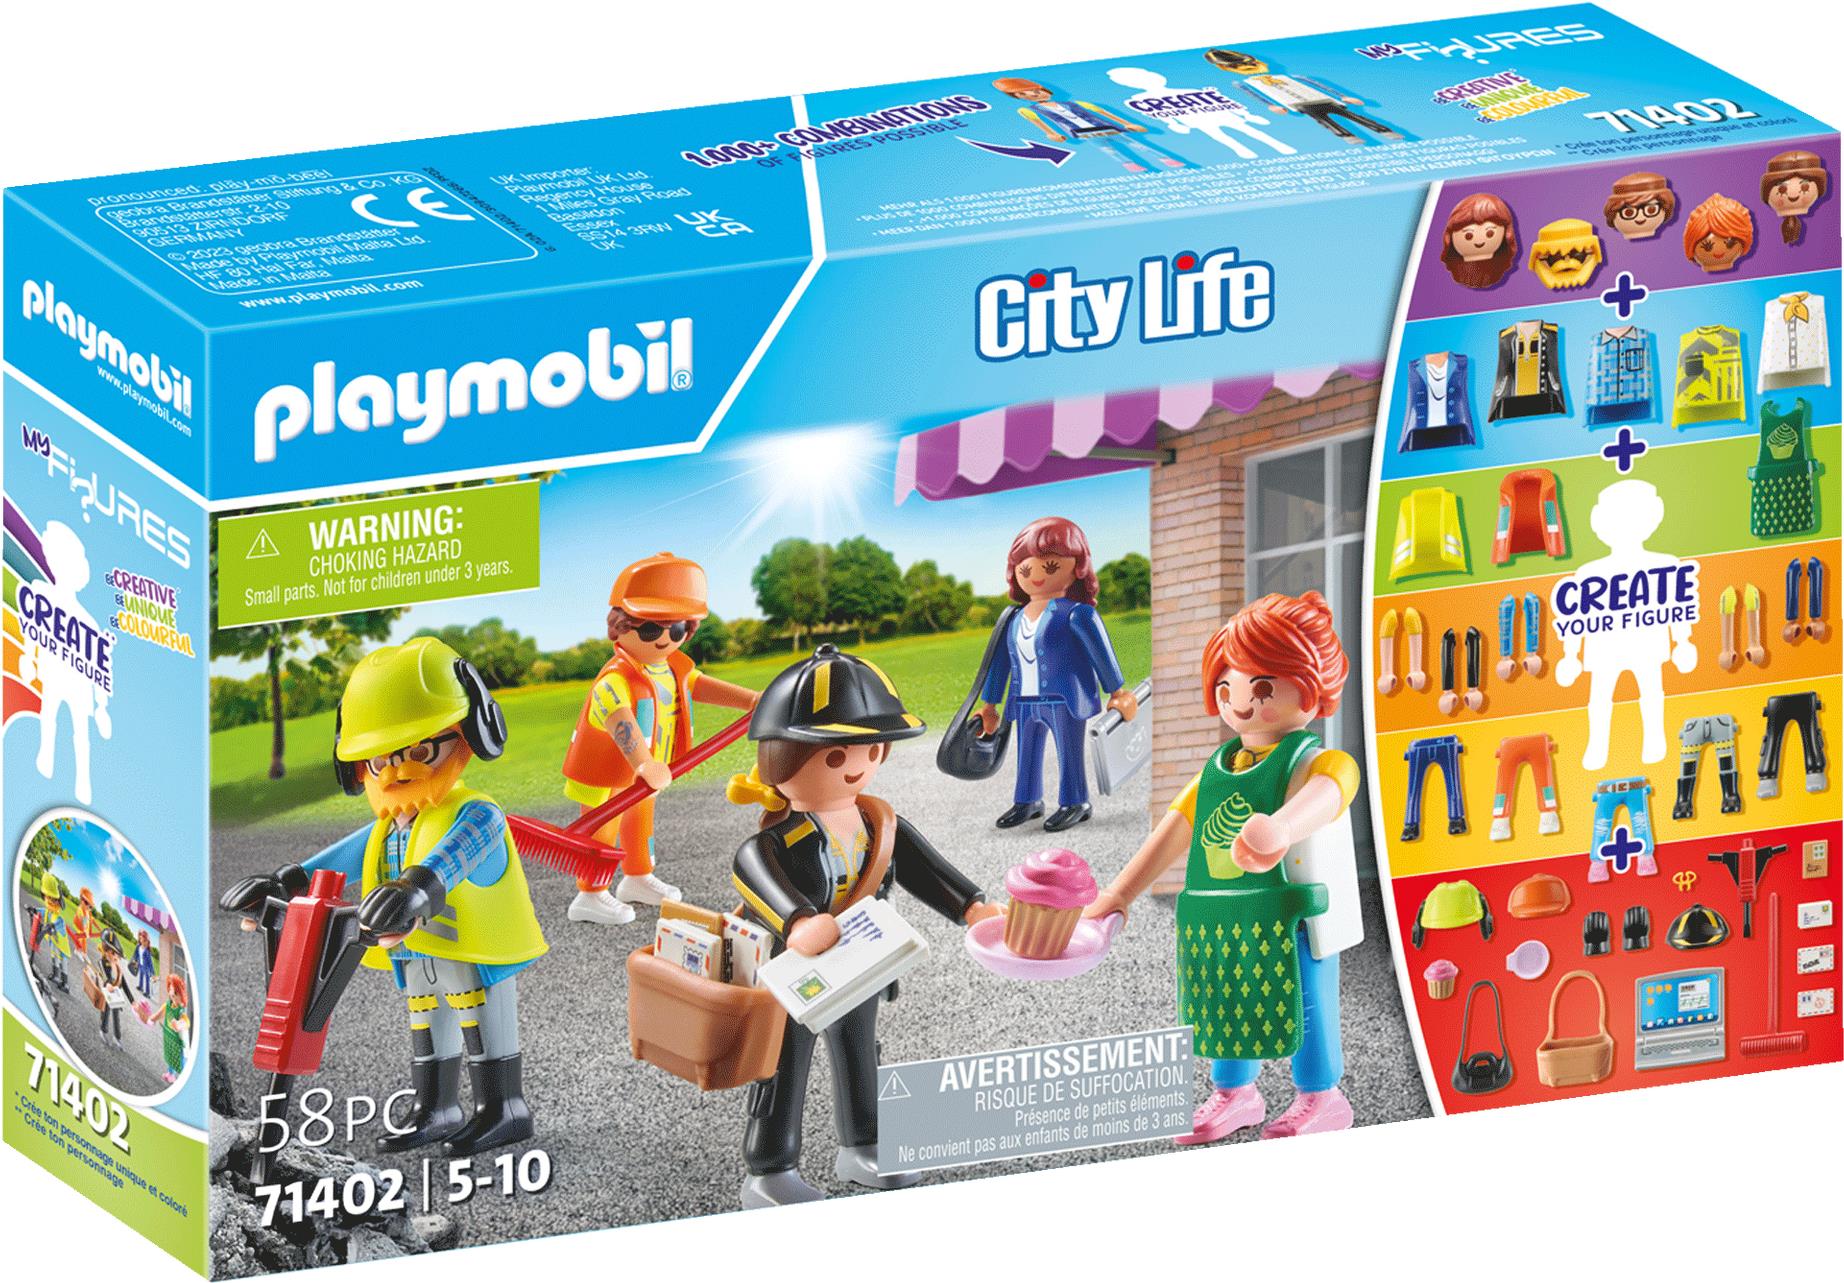 Playmobil City Life My Figures:. Empfohlenes Alter in Jahren (mind.): 5 Jahr(e), Produktfarbe: Mehrfarbig (71402)